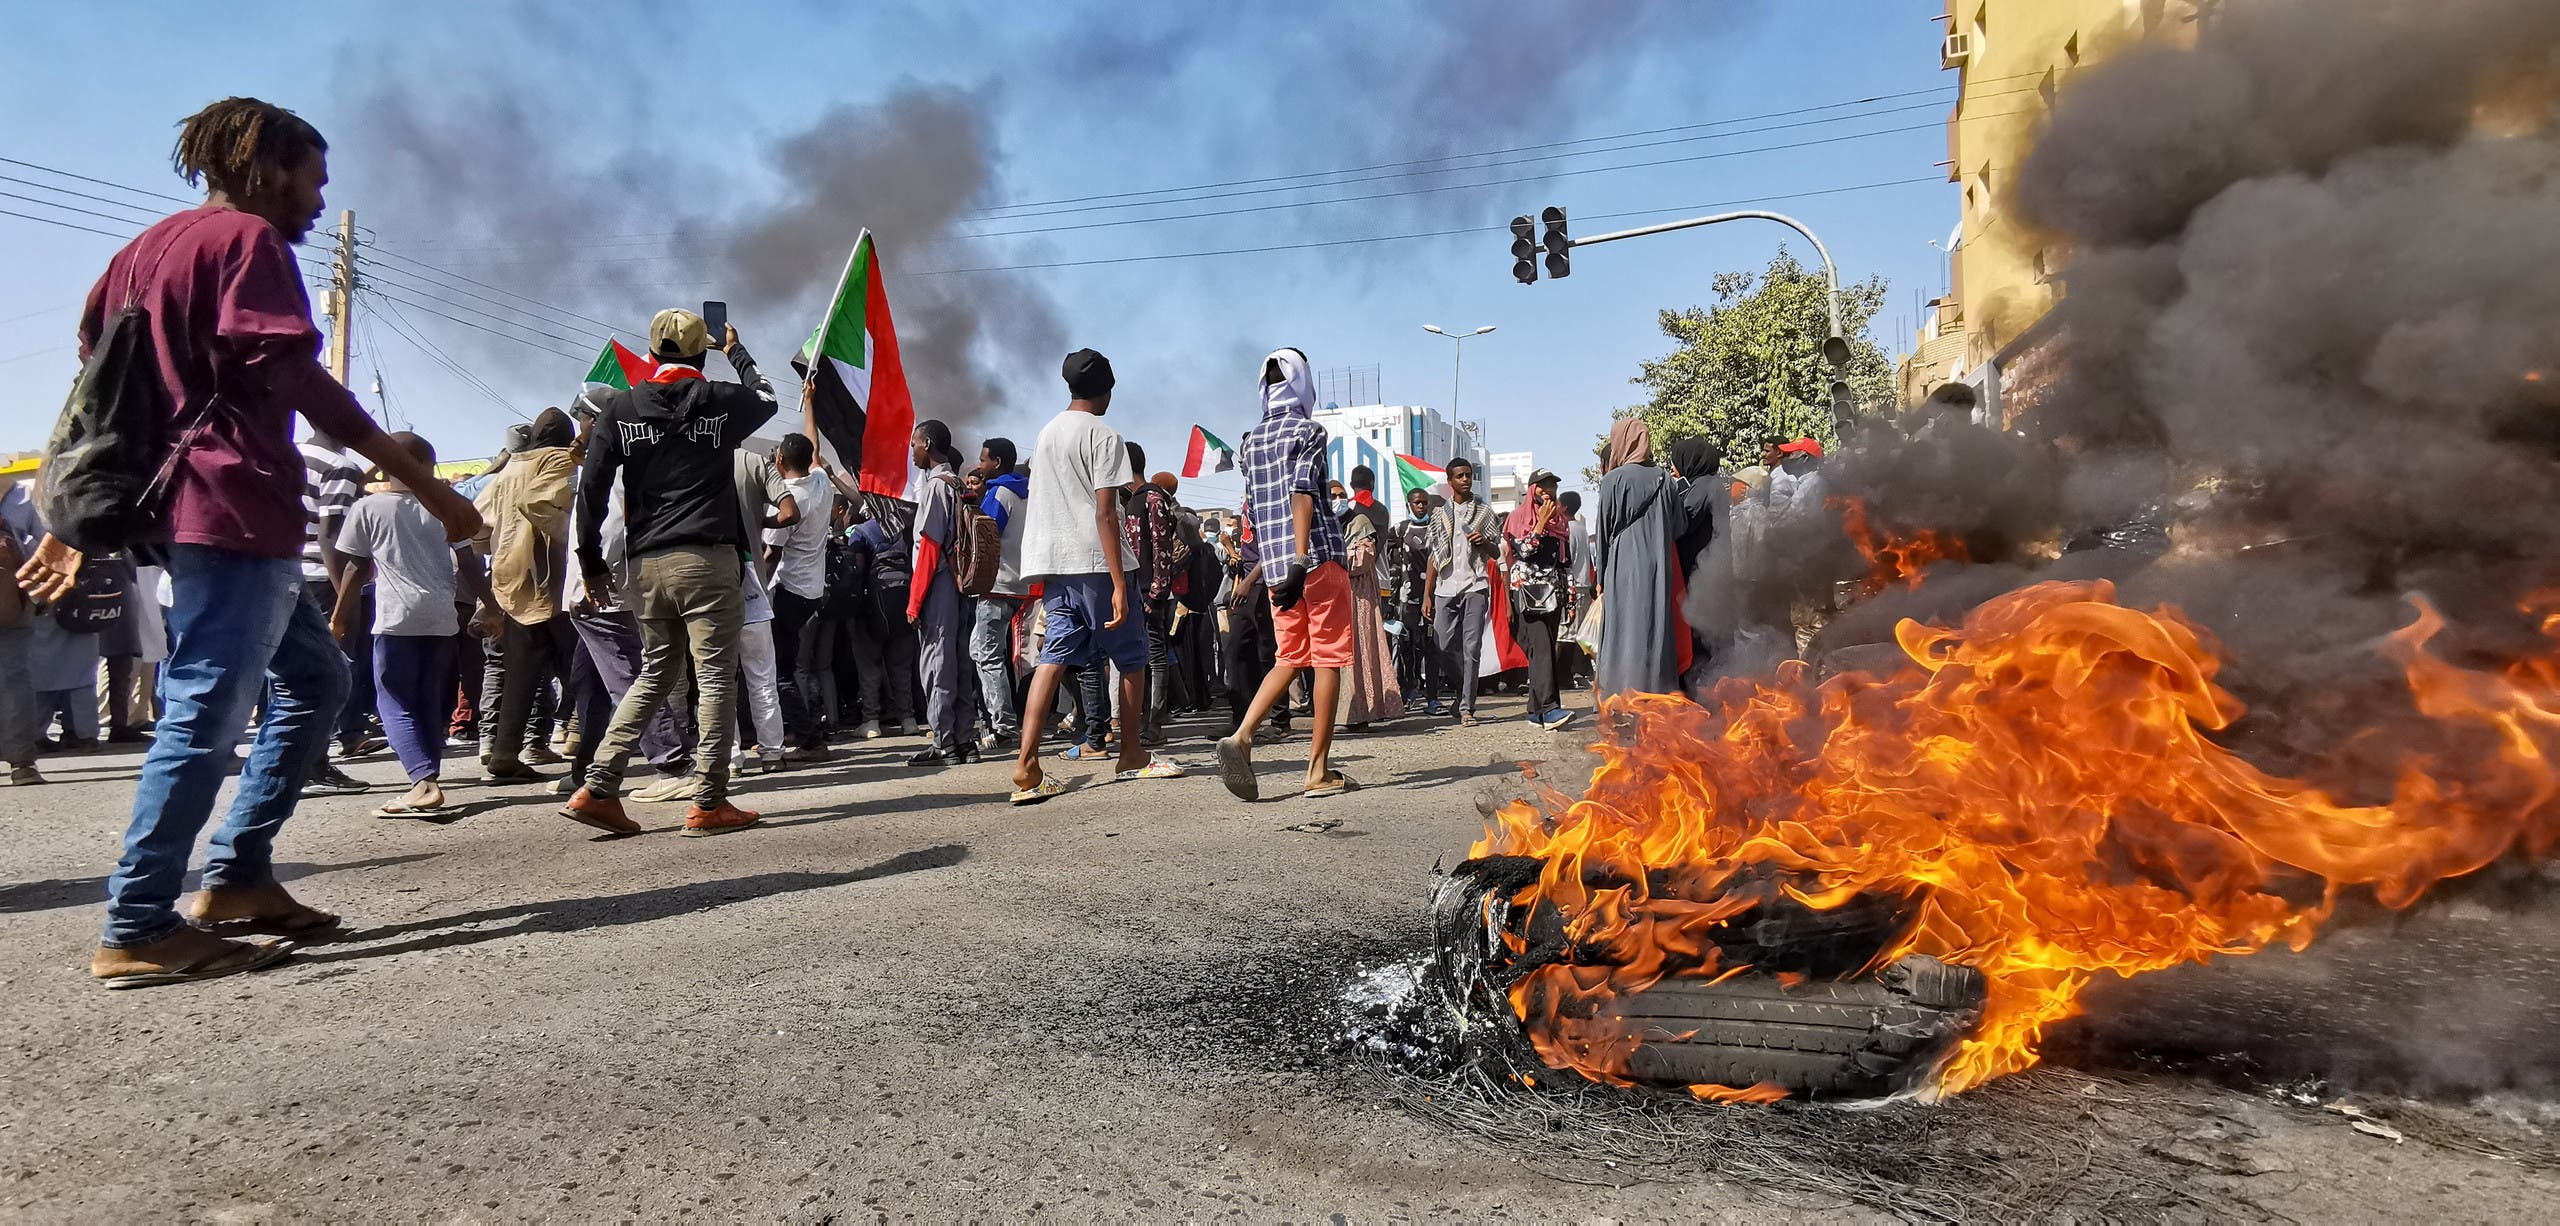 Previous demonstrations in Sudan